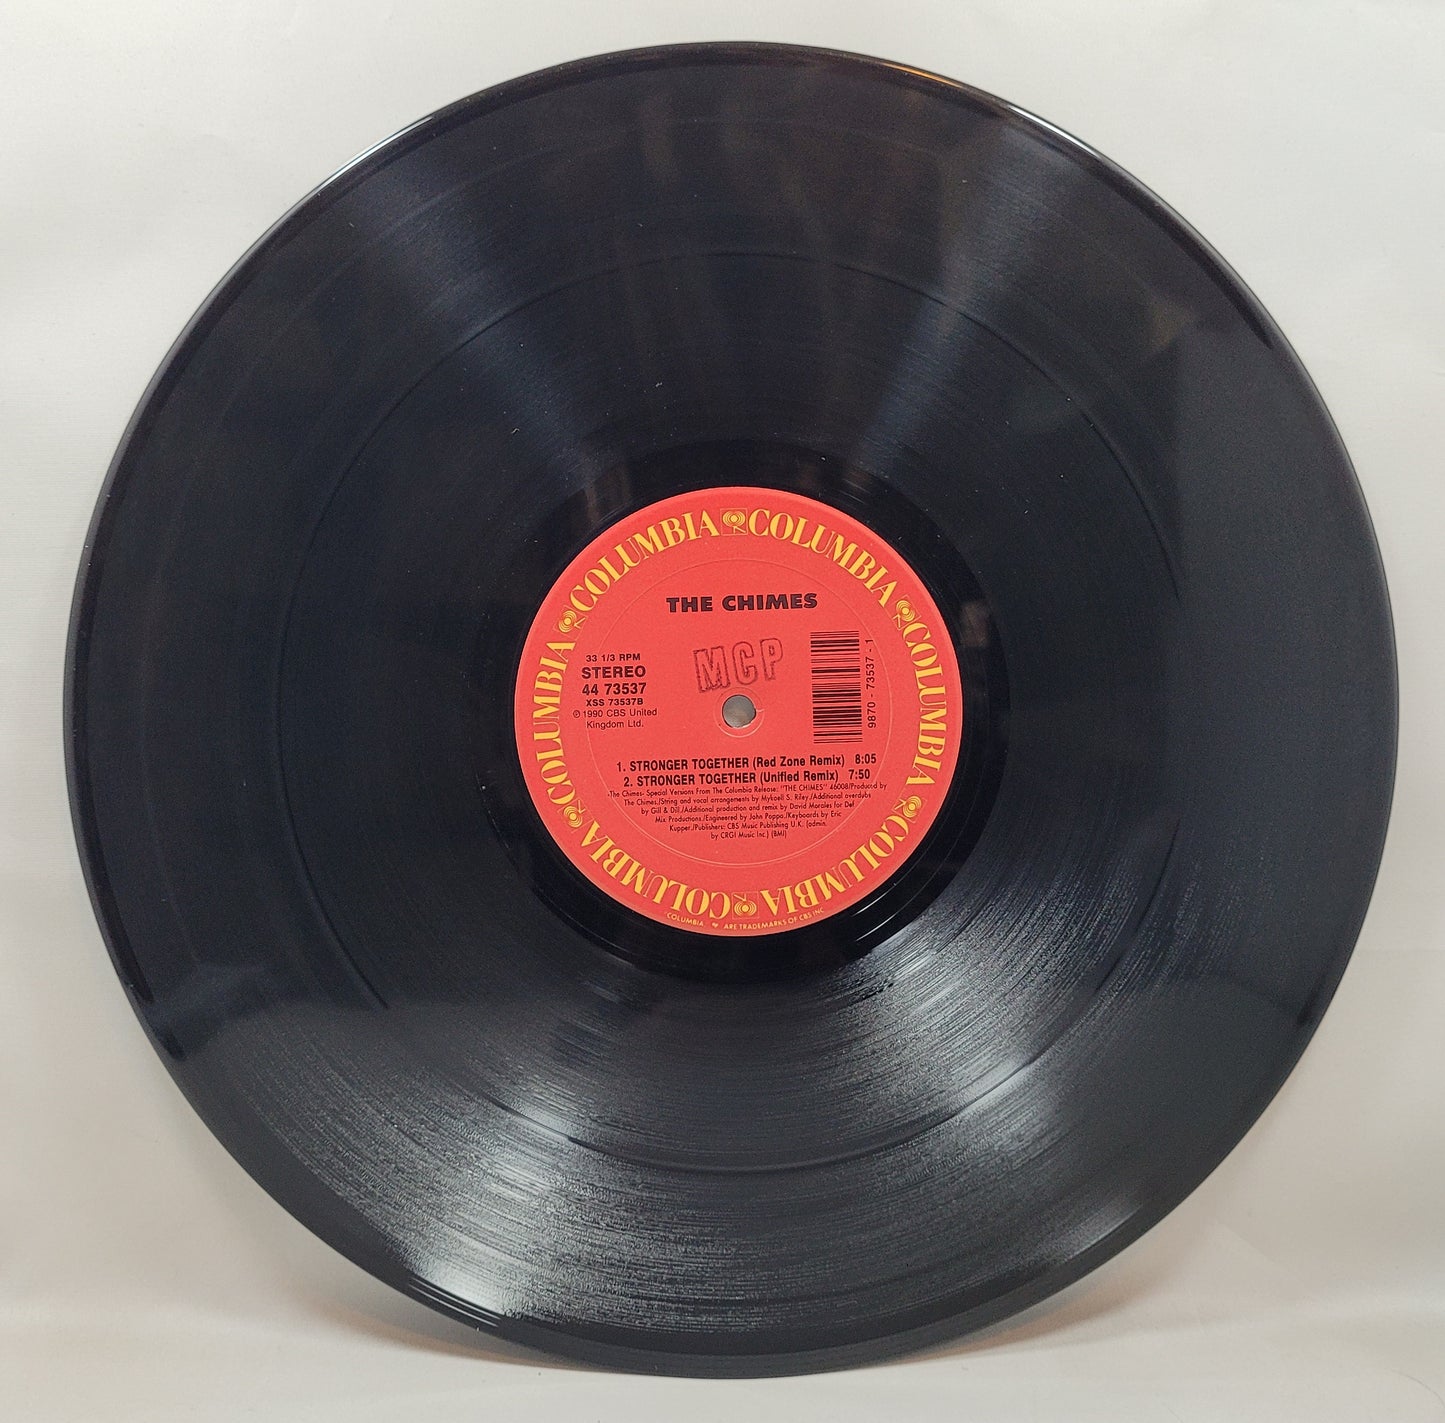 The Chimes - True Love [Vinyl Record 12" Single]